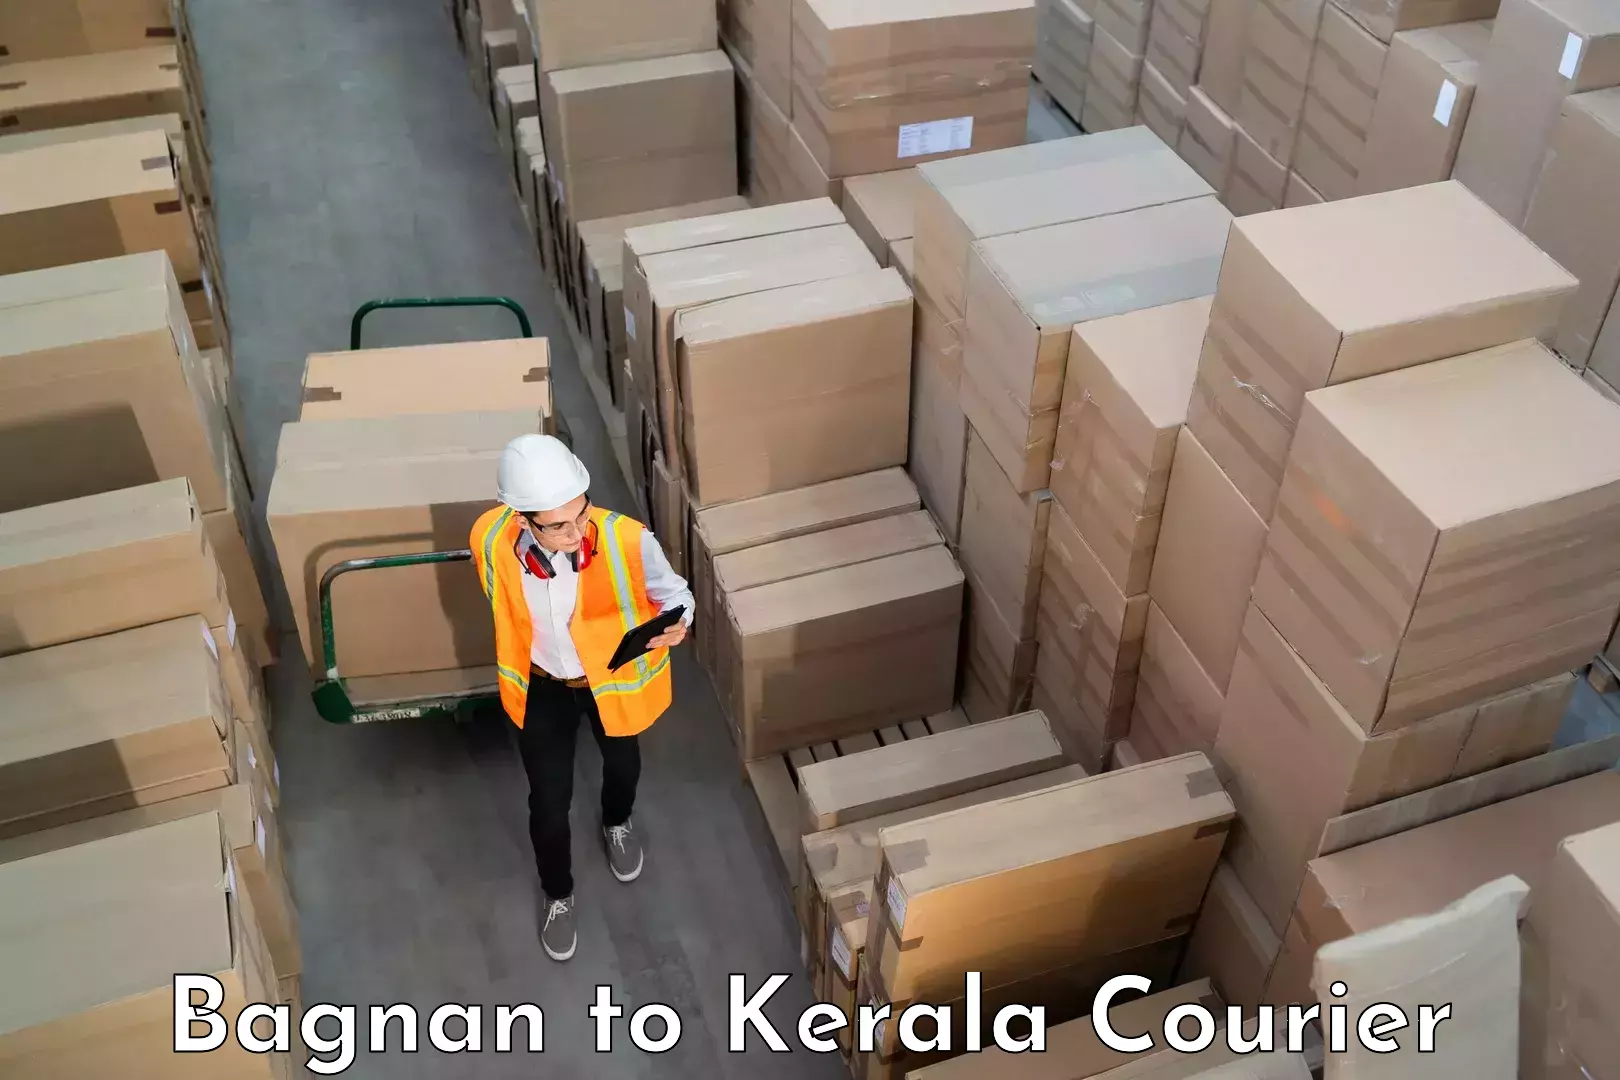 Baggage transport cost Bagnan to Cochin Port Kochi